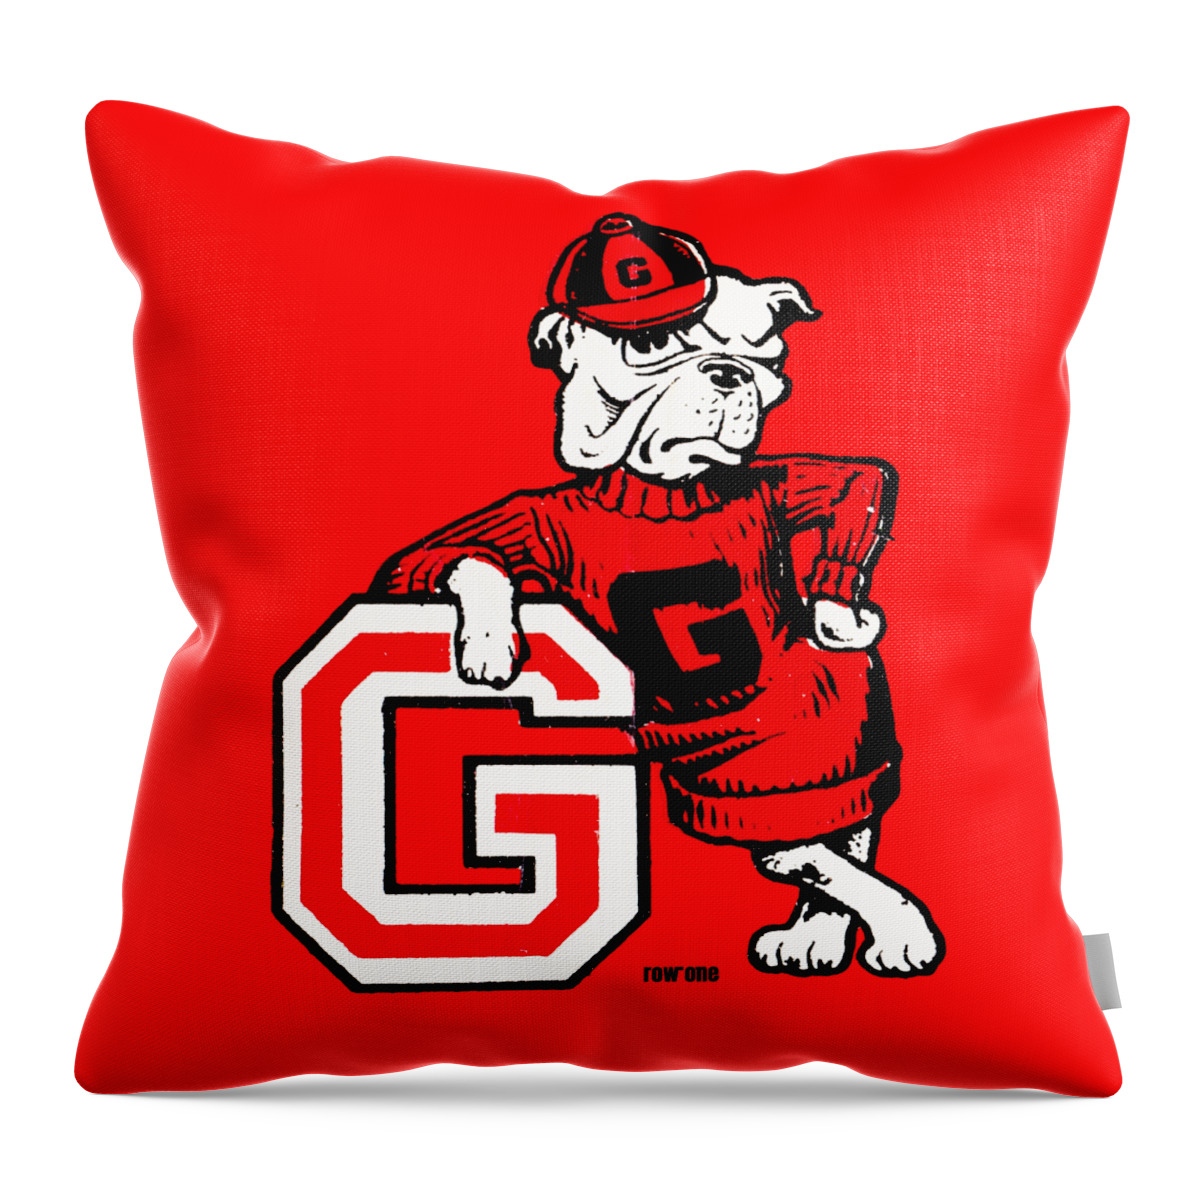 Georgia Throw Pillow featuring the mixed media Georgia Bulldog by Row One Brand